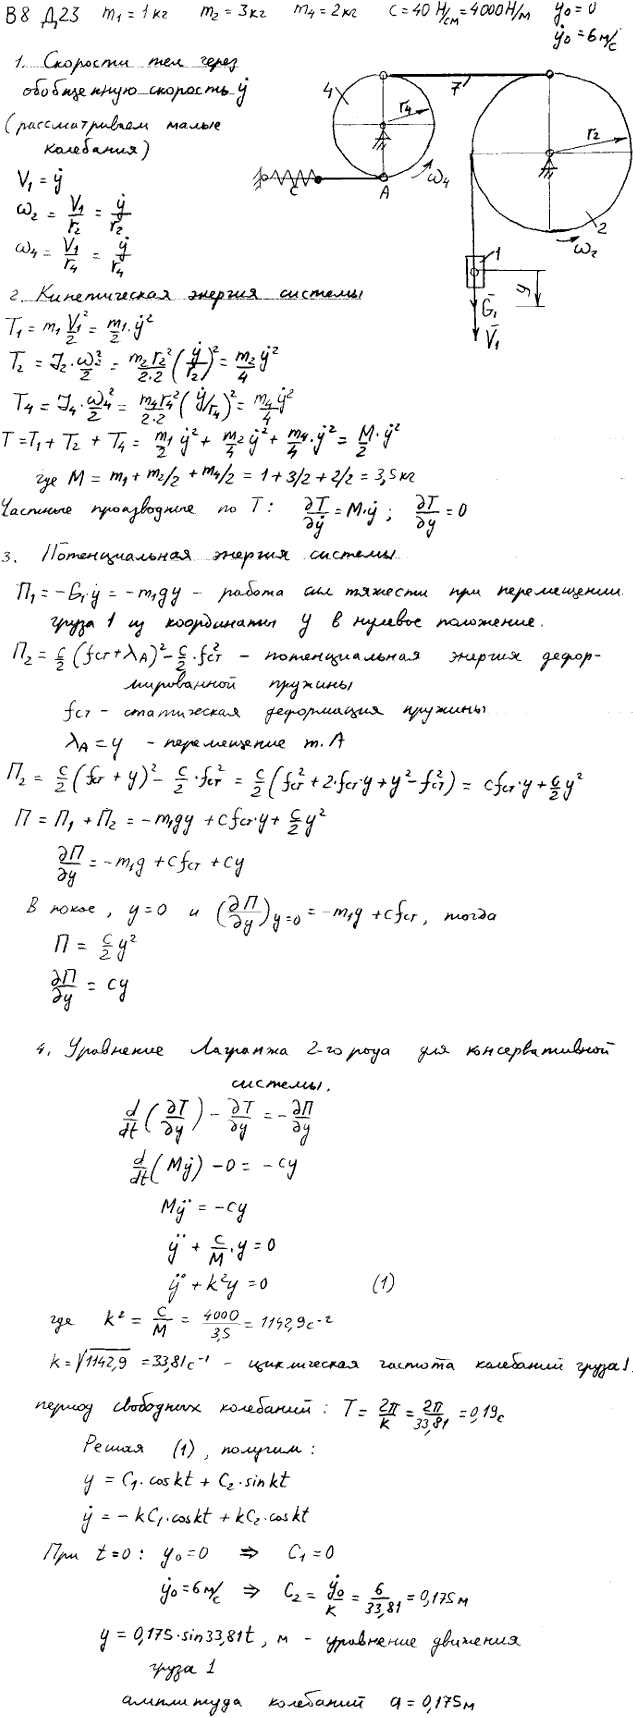 Задание Д.23 вариант 8. m1=1 кг; m2=3 кг; m3, m4, m5=2 c=40 Н/см; y0=0; y^\'0=6,0 м/с